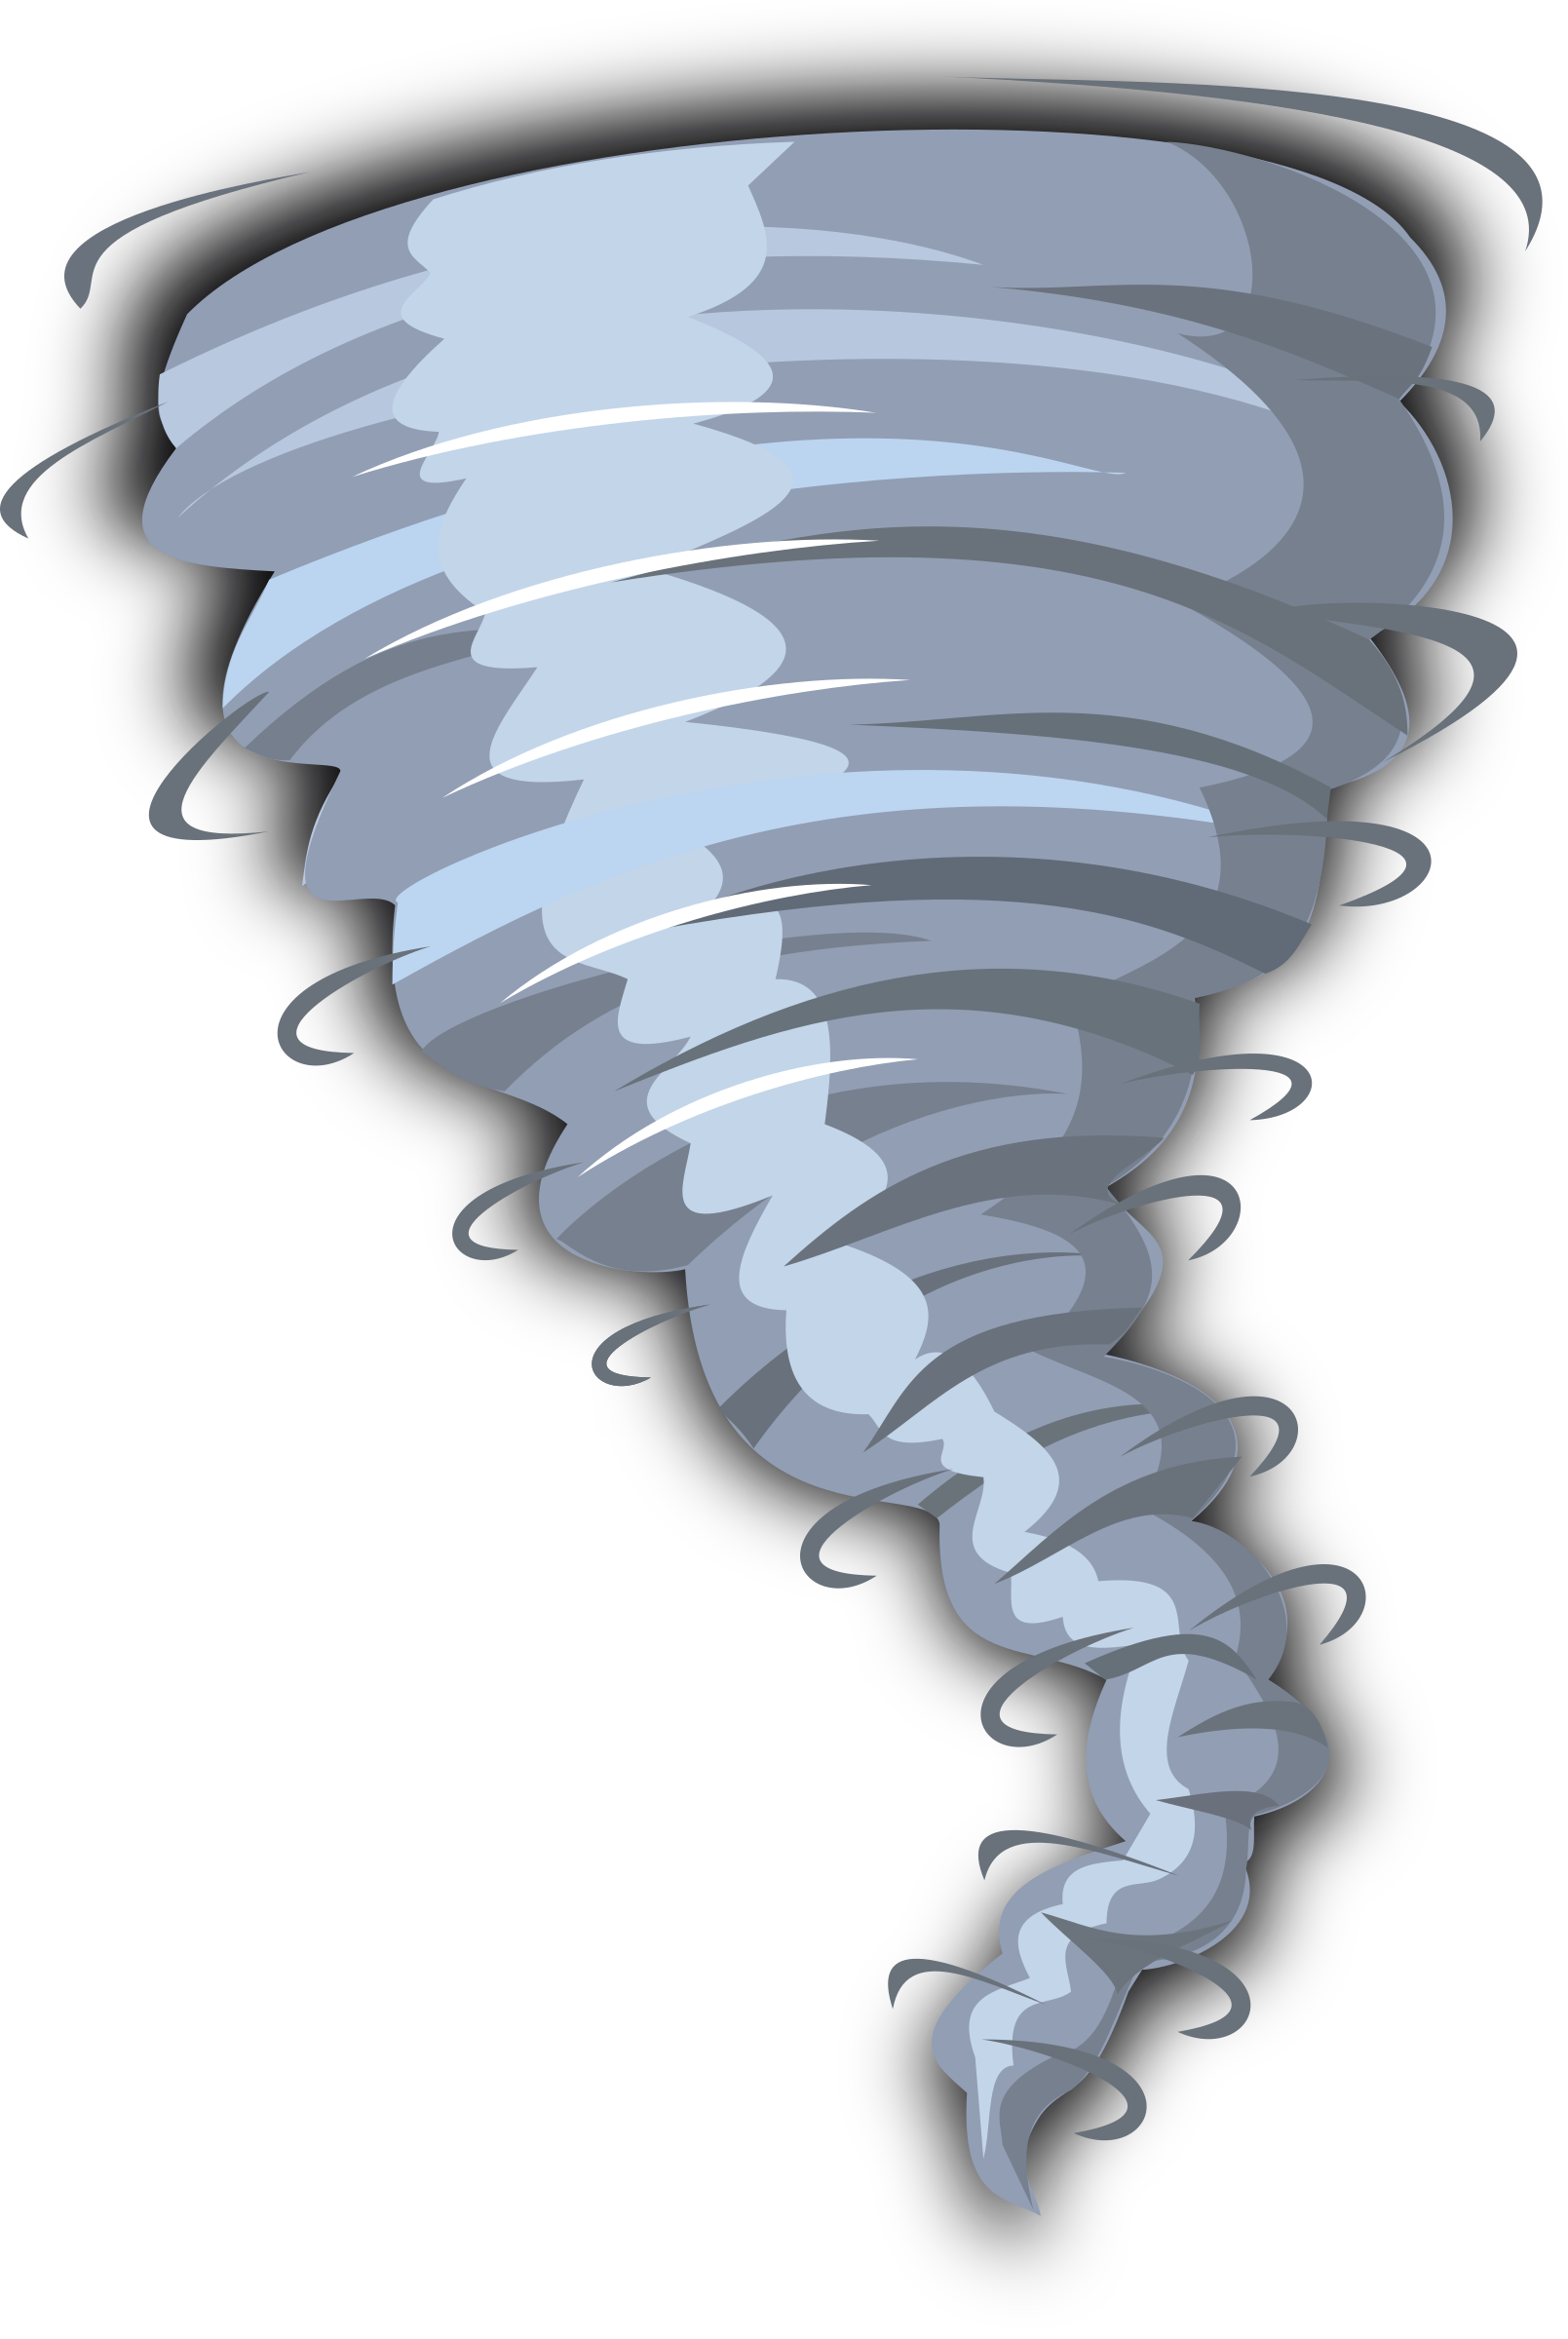 Tornado clip art free. Windy clipart severe